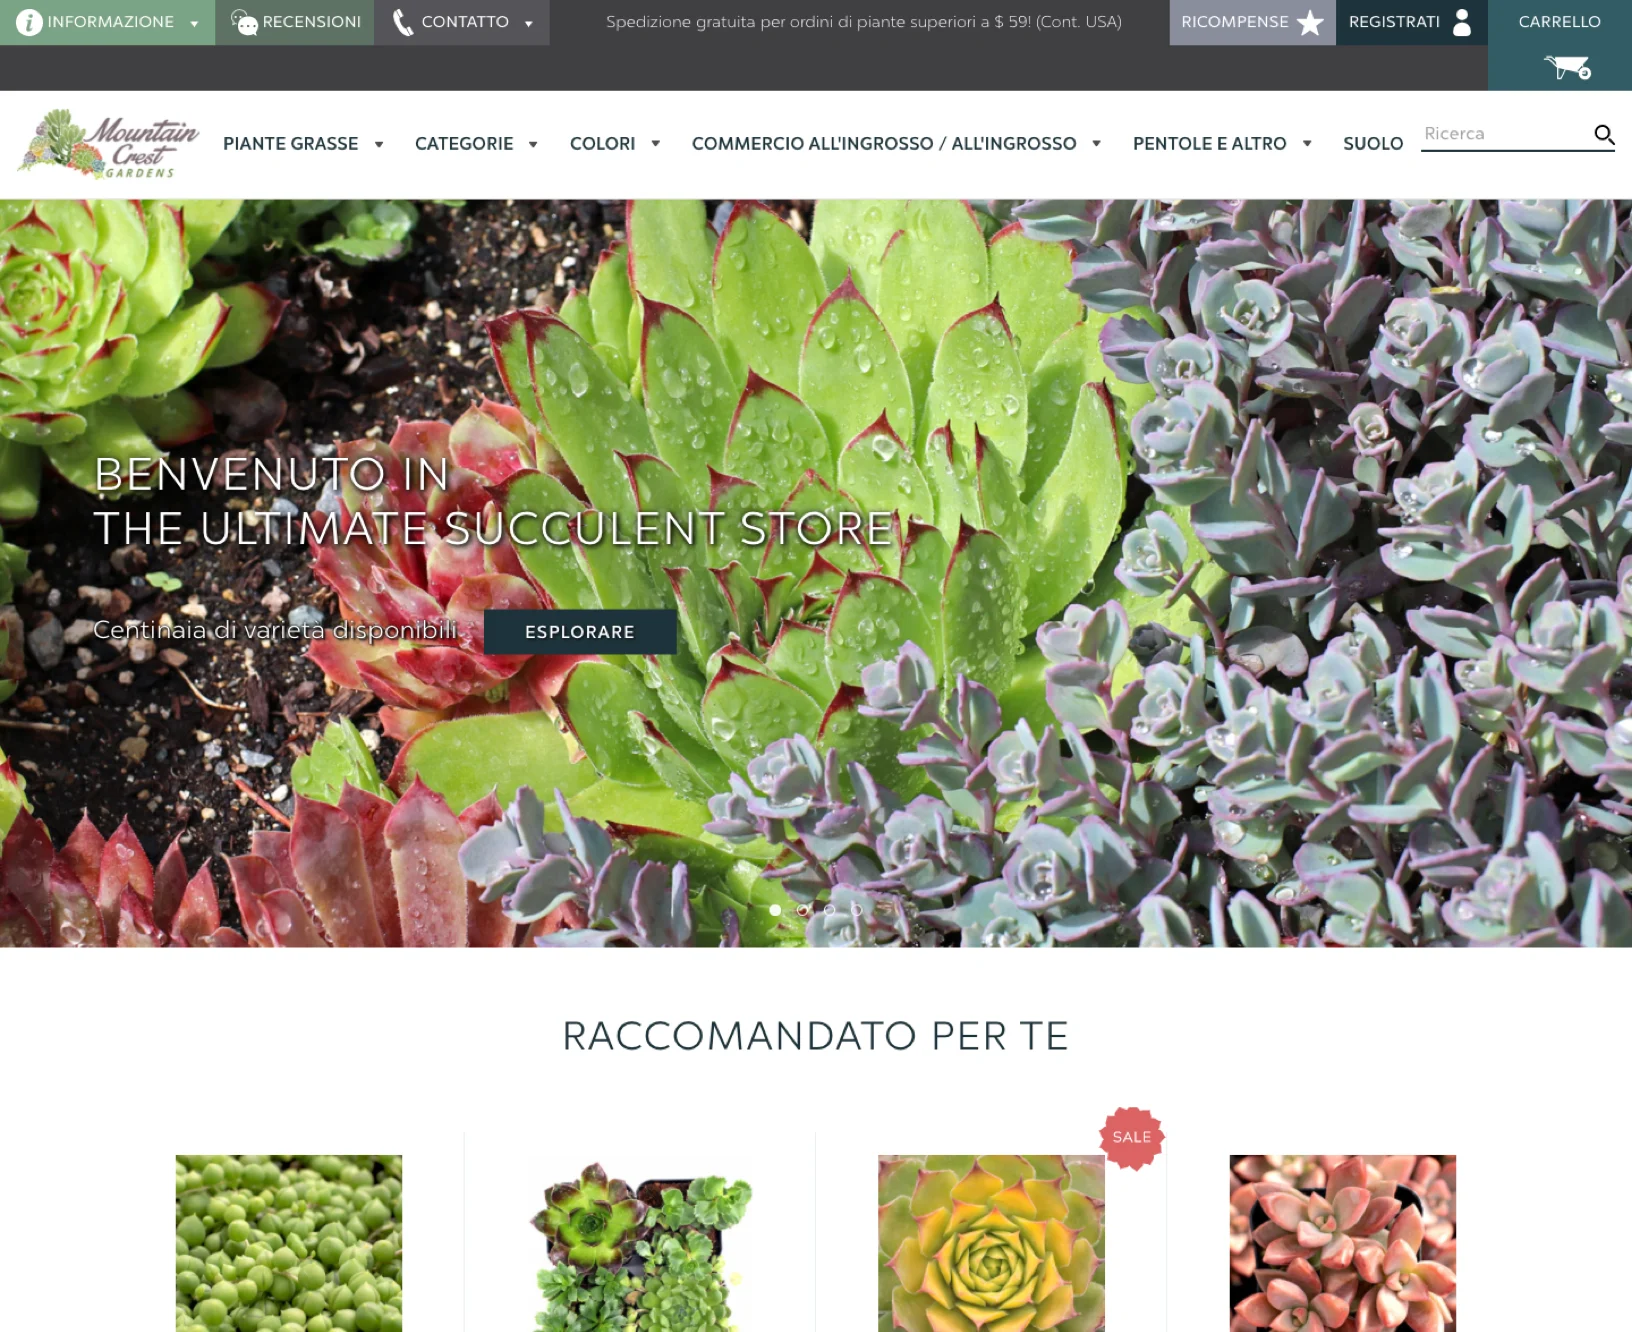 https://www-cdn.bigcommerce.com/assets/italian-storefront-homepage-mountain-crest-gardens.png